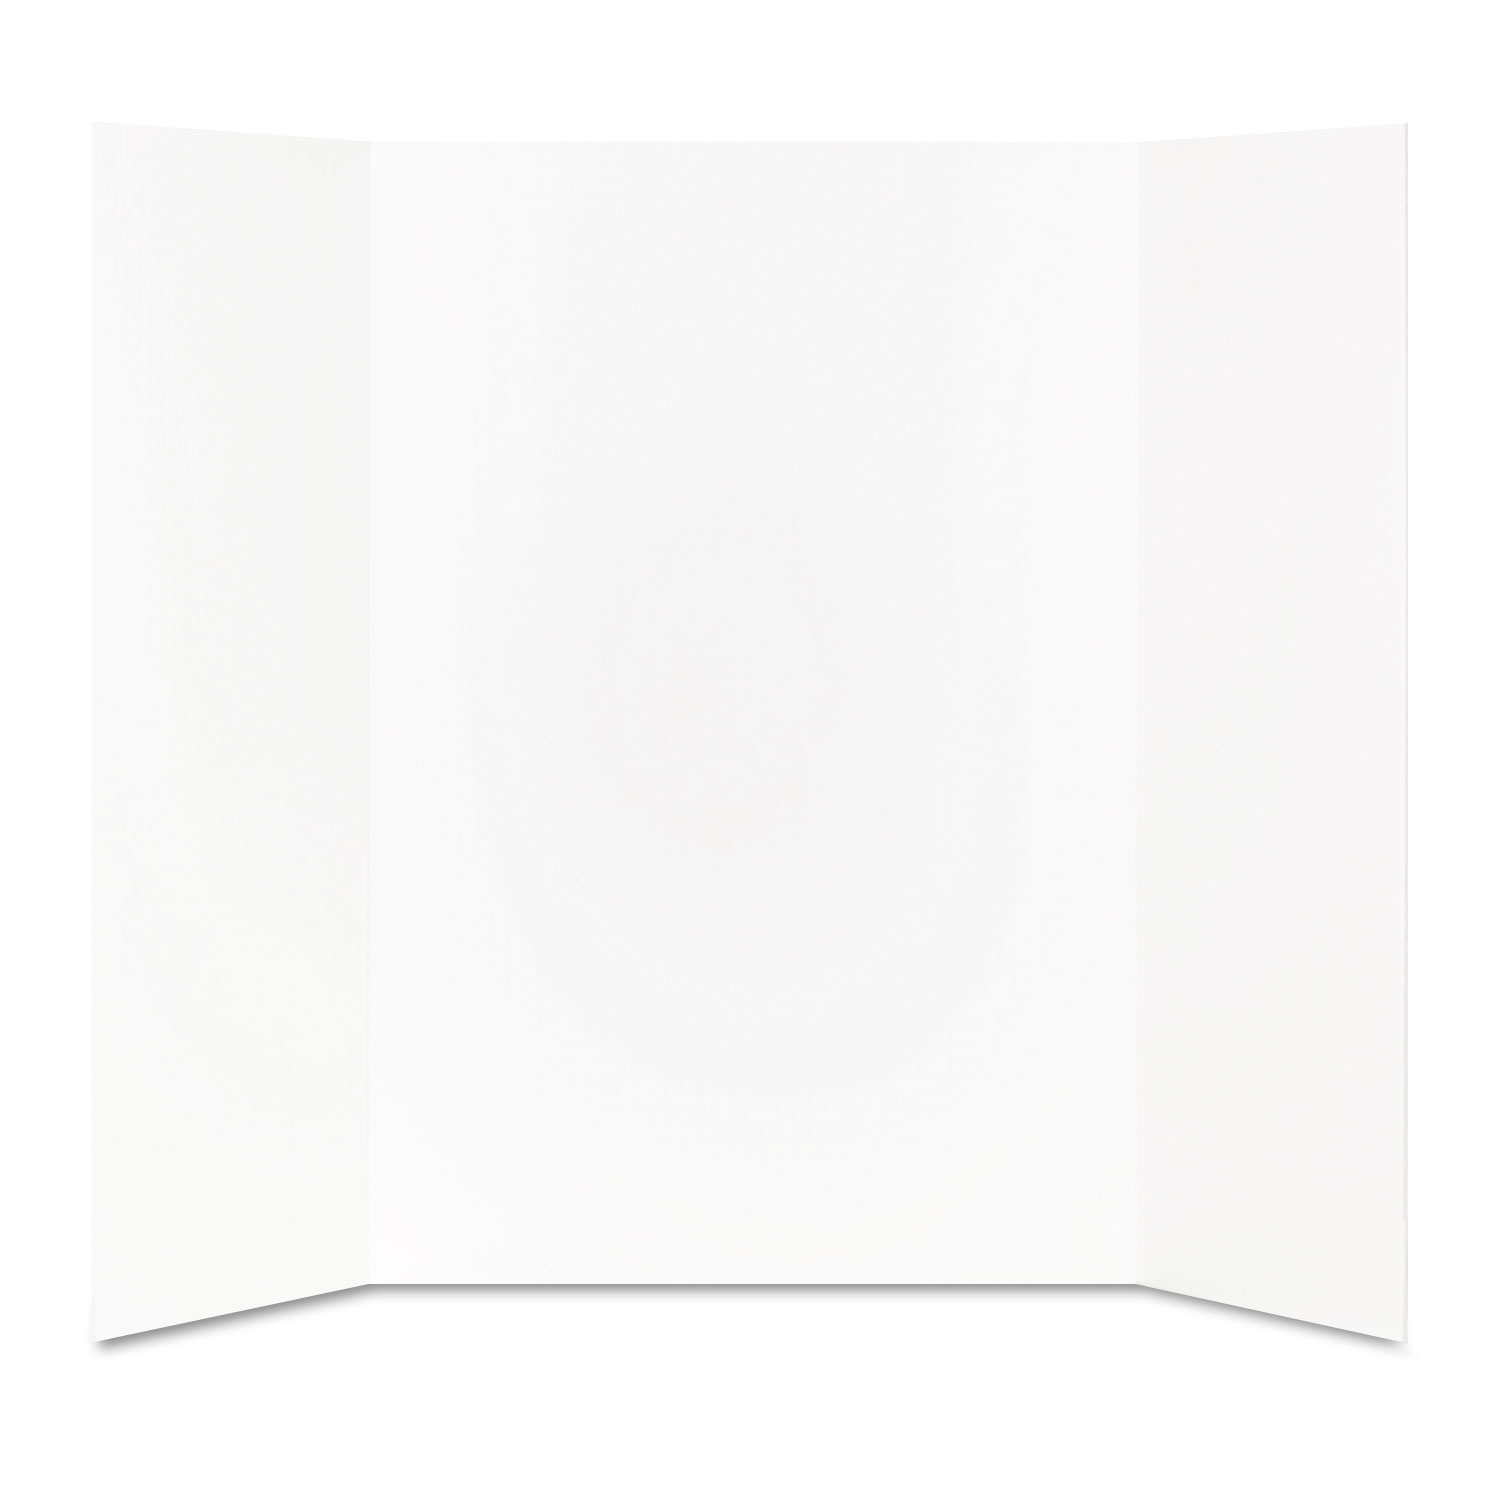 Guide-Line Foam Display Board, 48 x 36, White, 6/Carton